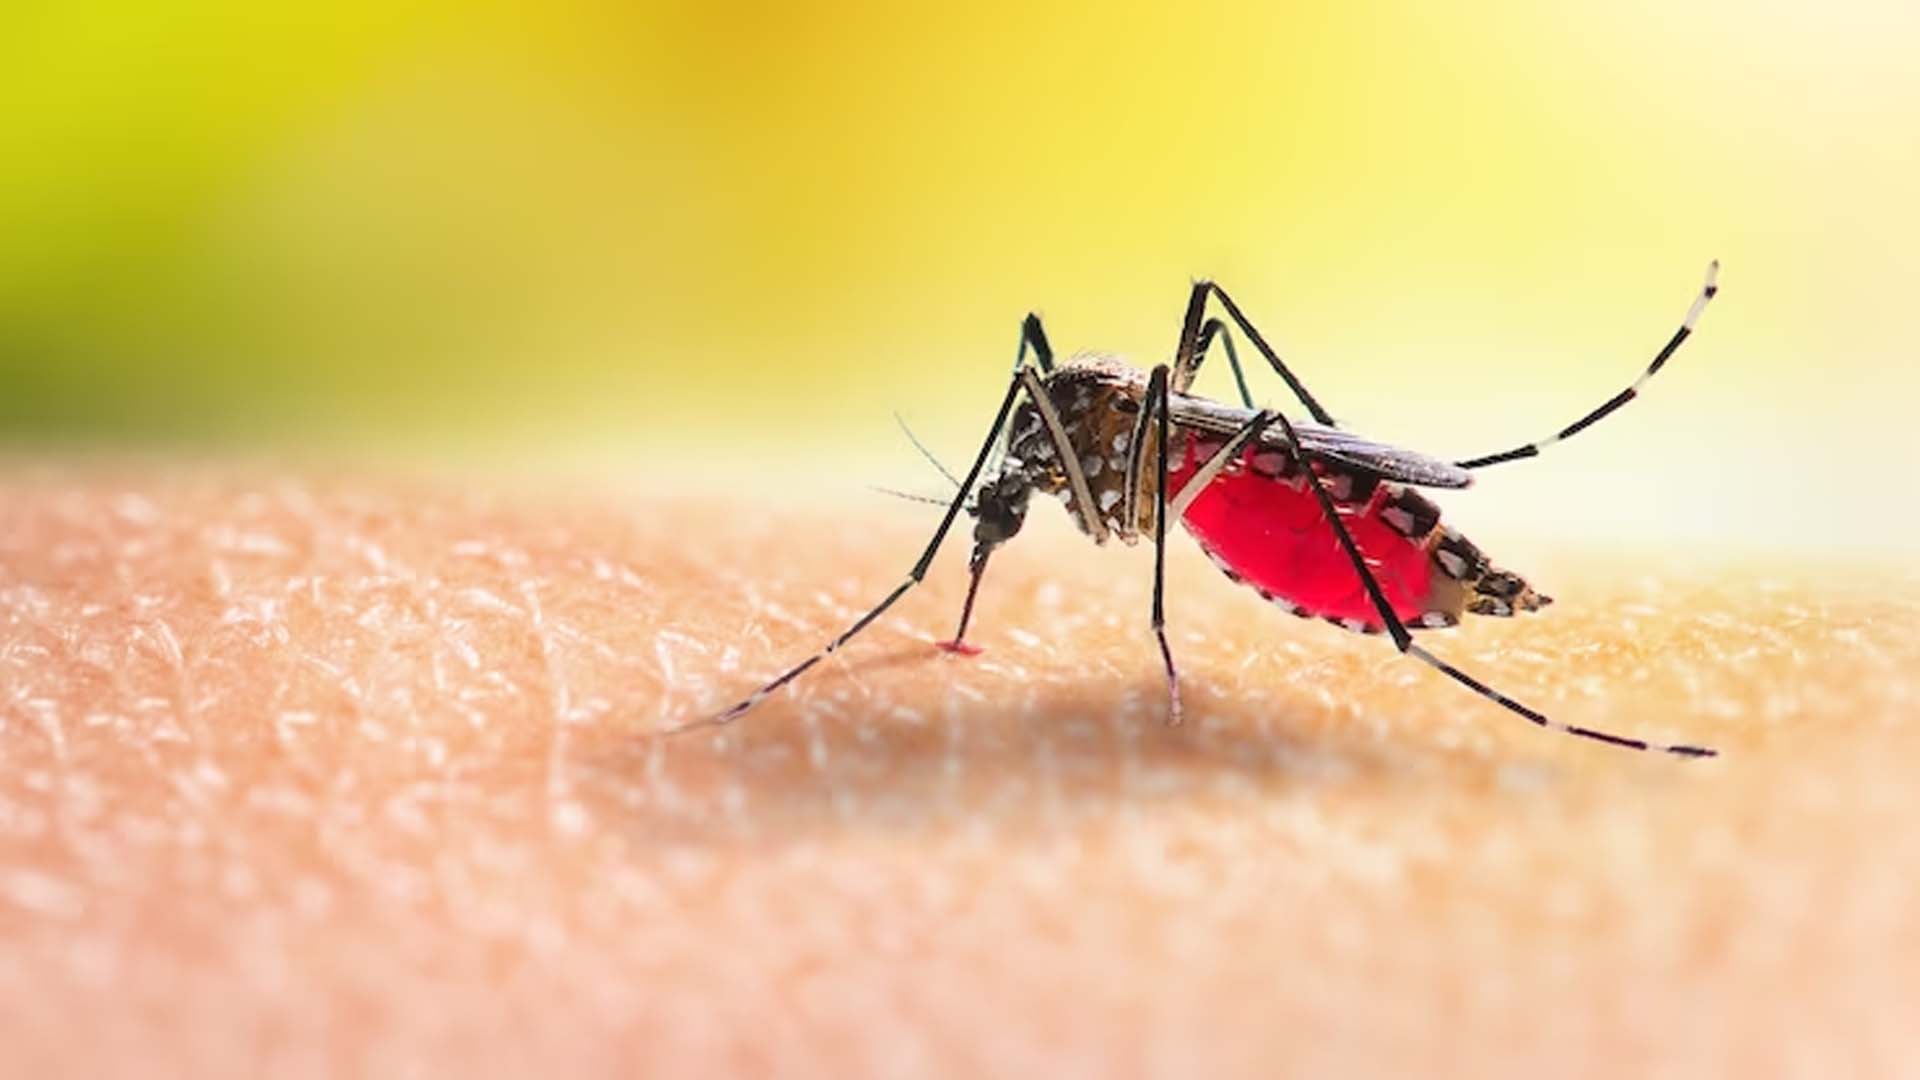 mosquito Biting and sucking human blood